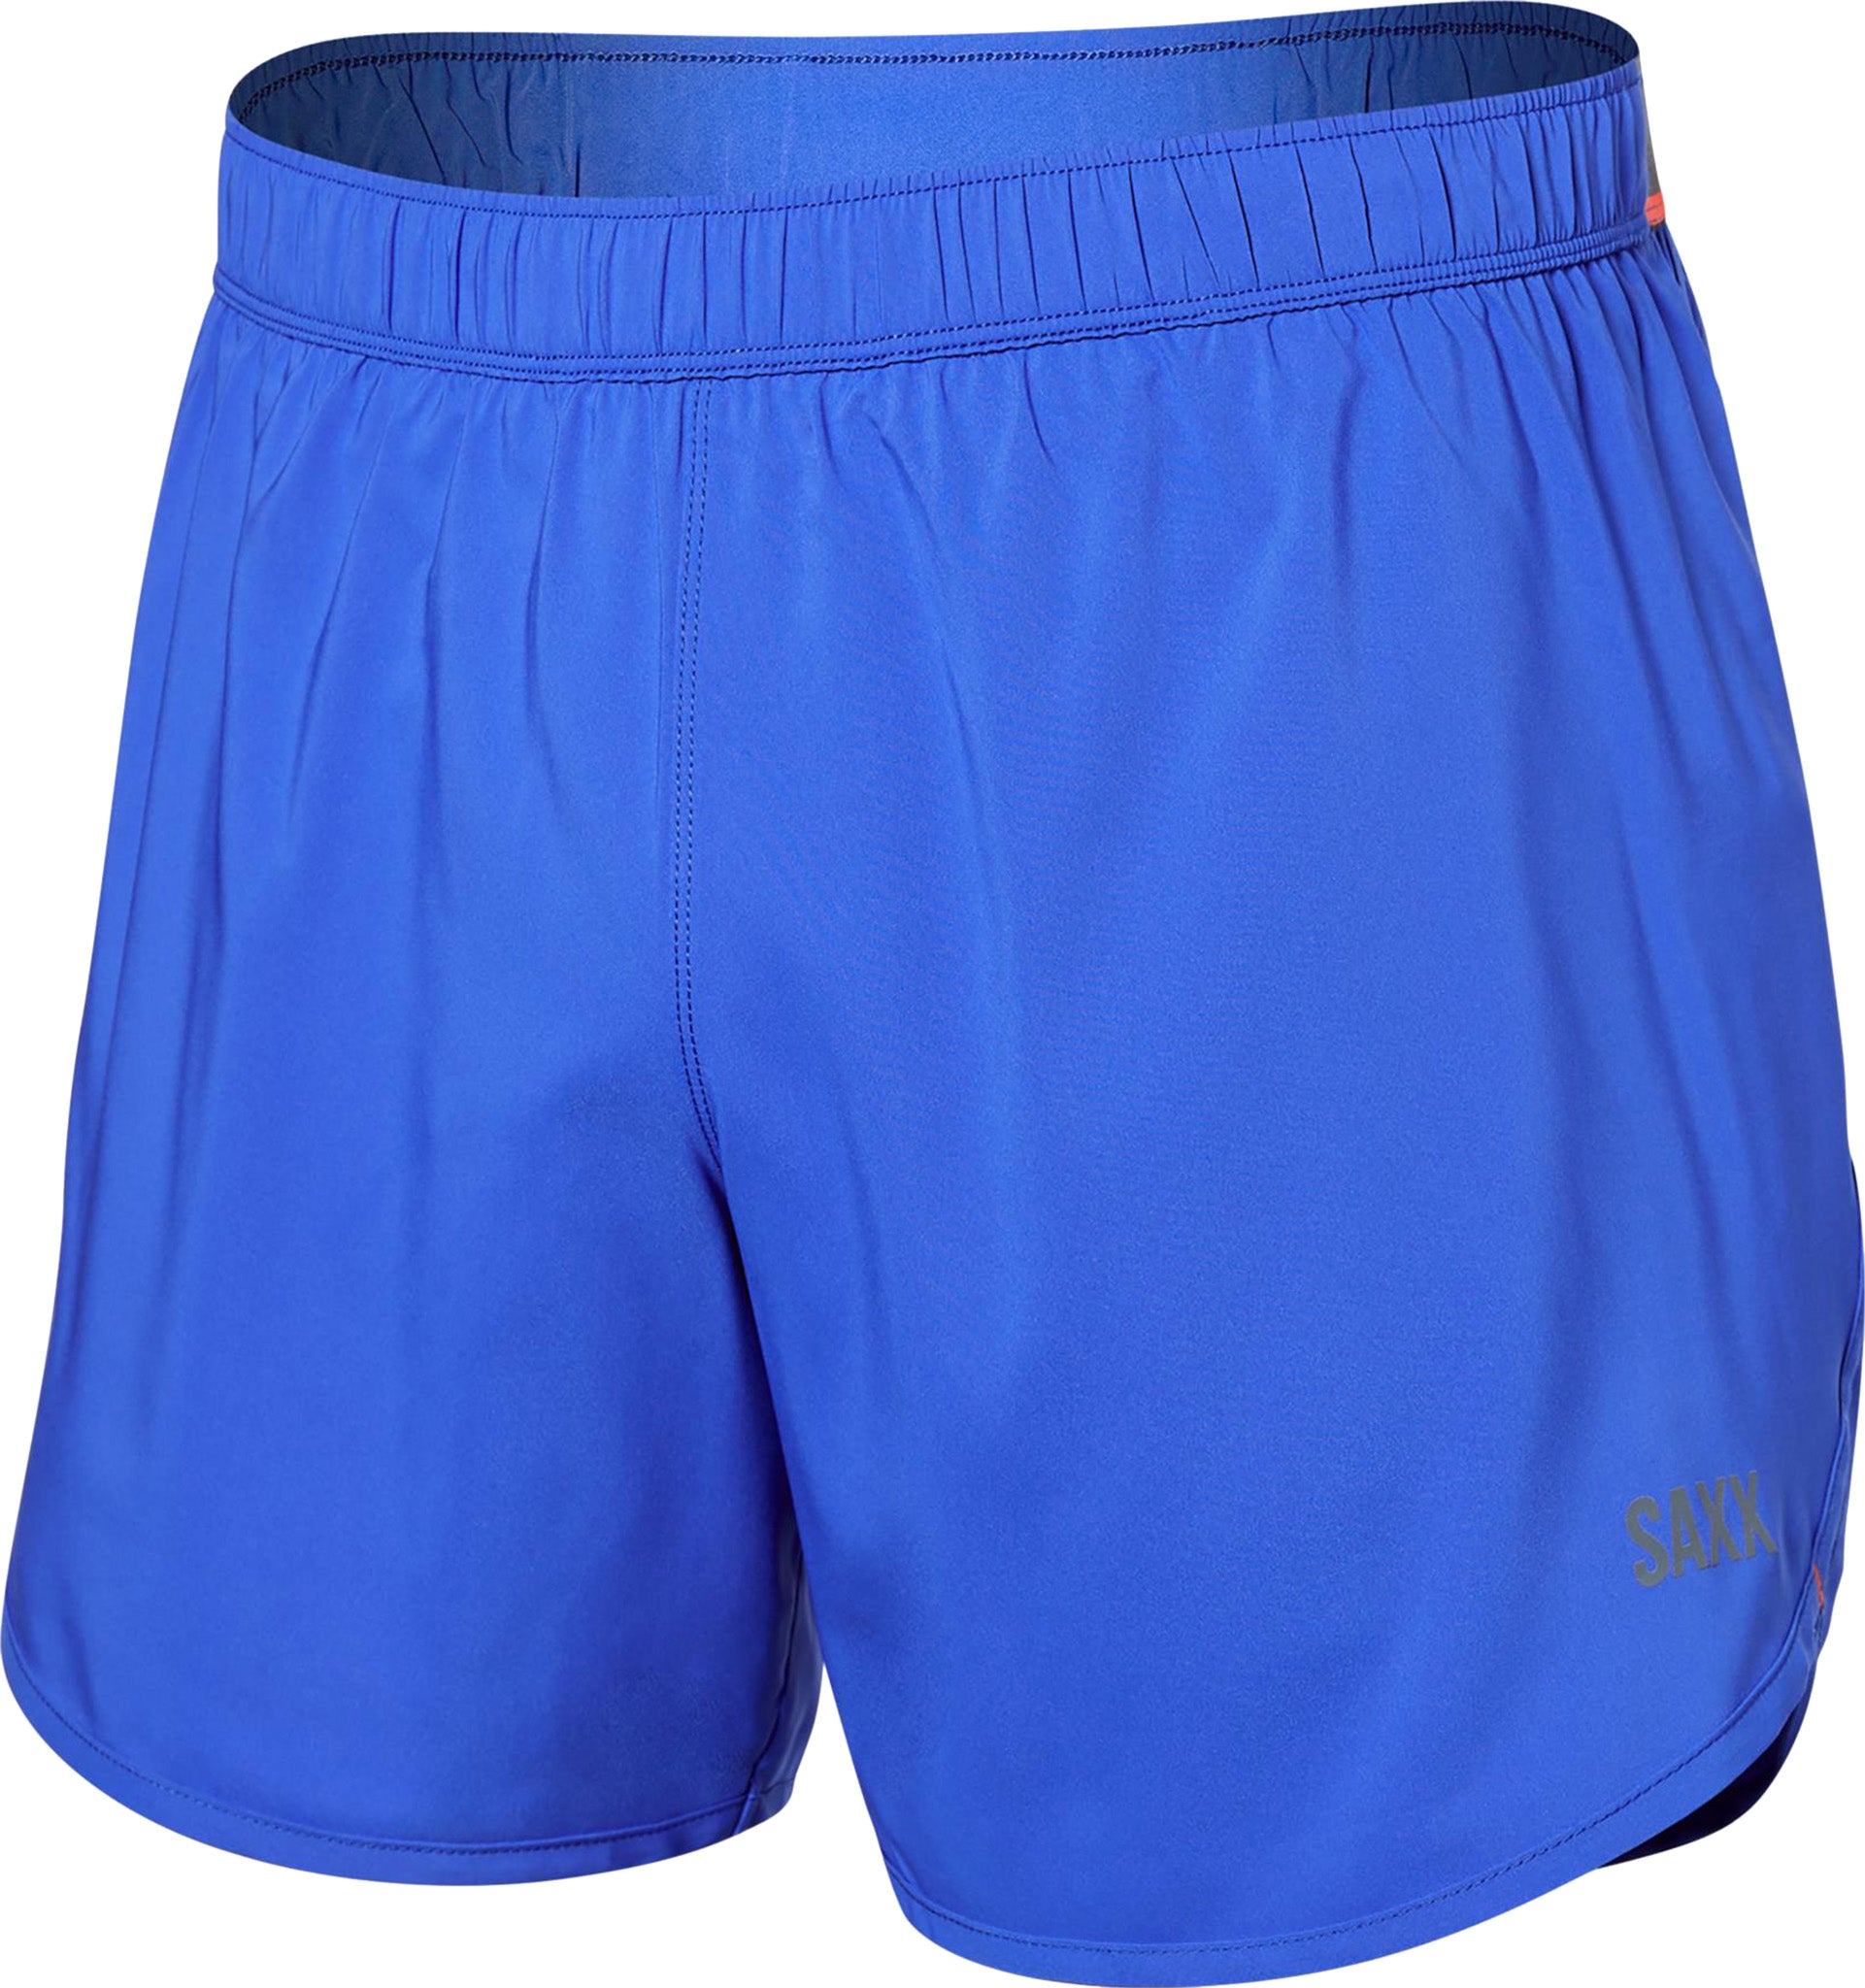 SAXX Hightail 5 In 2N1 Running Shorts - Men's | Altitude Sports